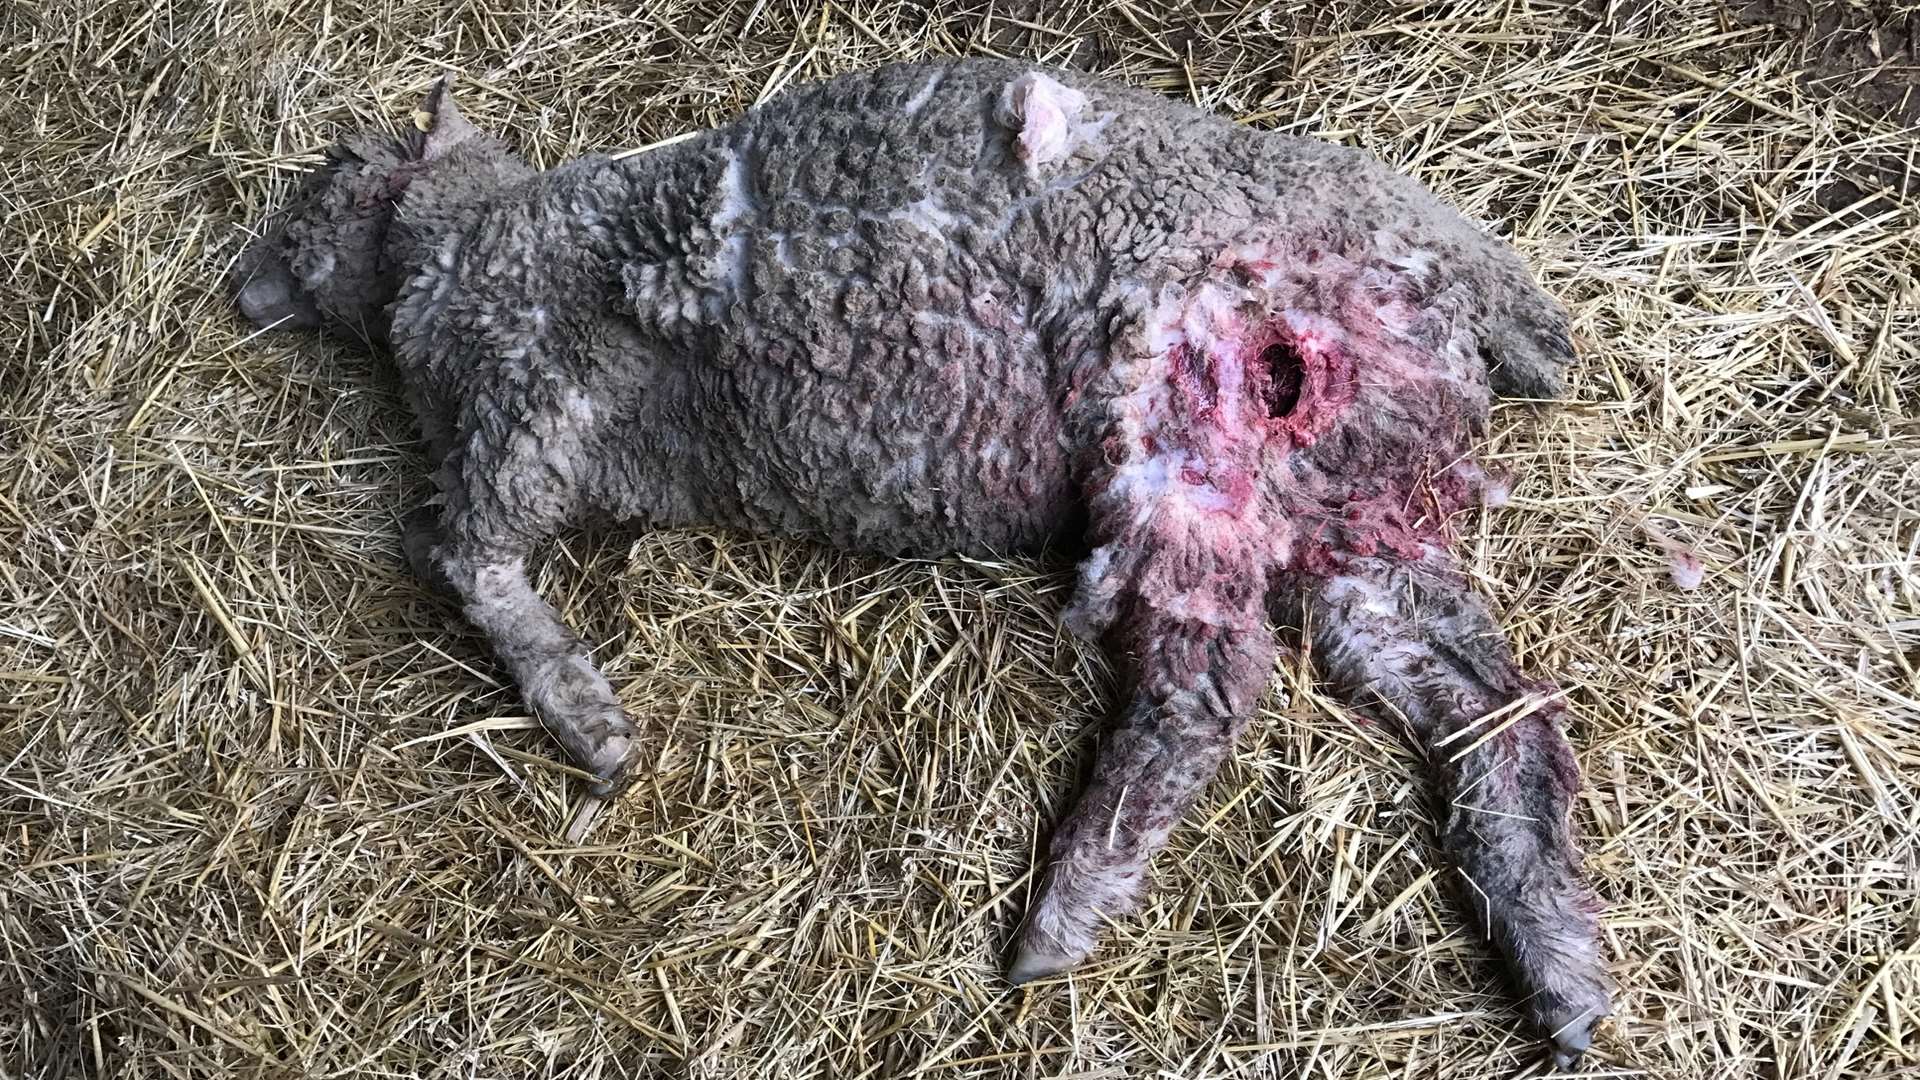 One of the sheep mauled at Silcocks Farm